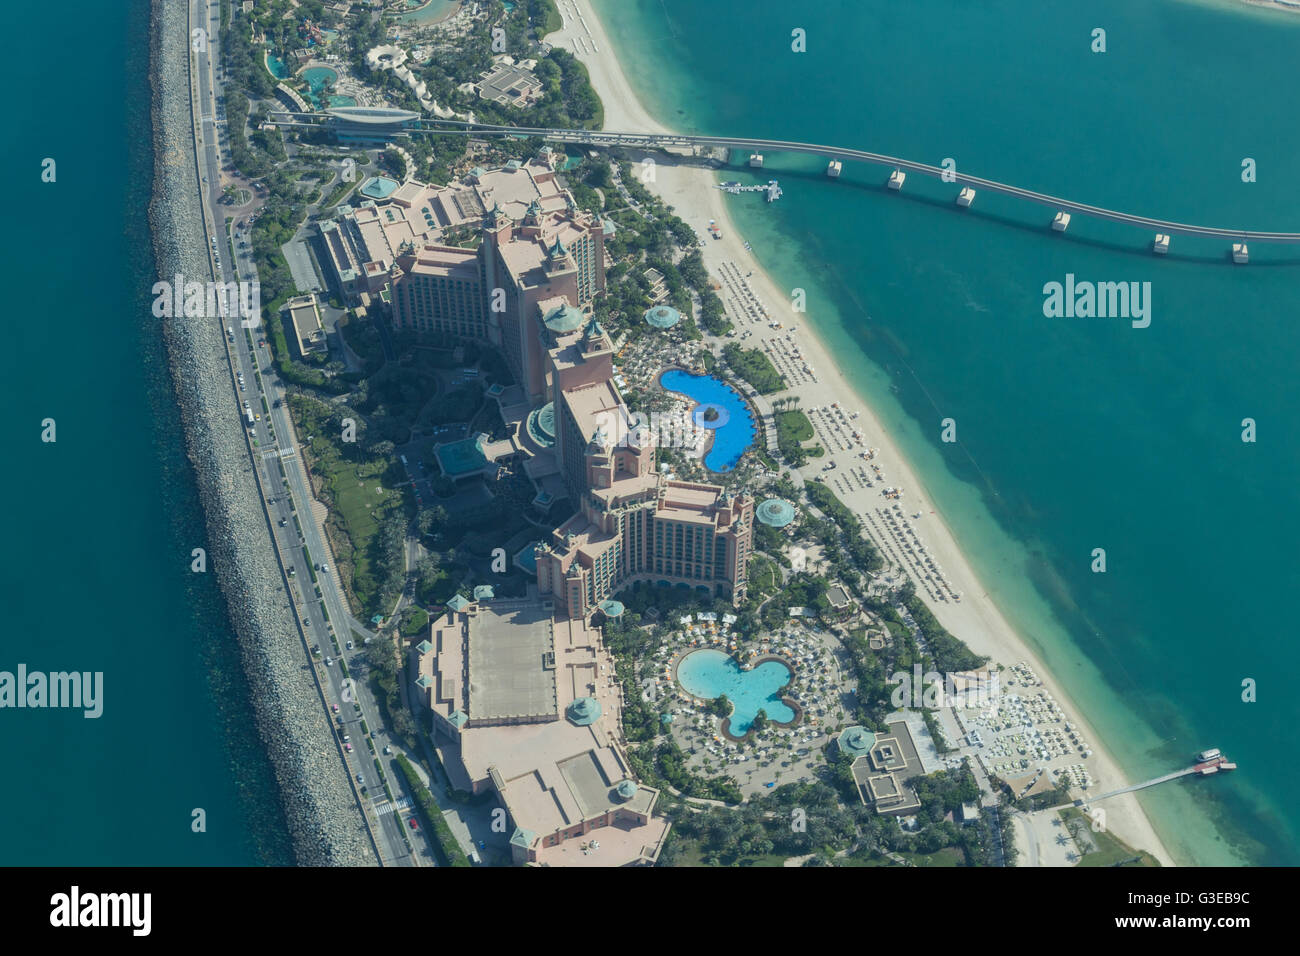 Dubai, United Arab Emirates - October 17, 2014: The famous Atlantis The Palm Hotel on the artificial palm island. Stock Photo